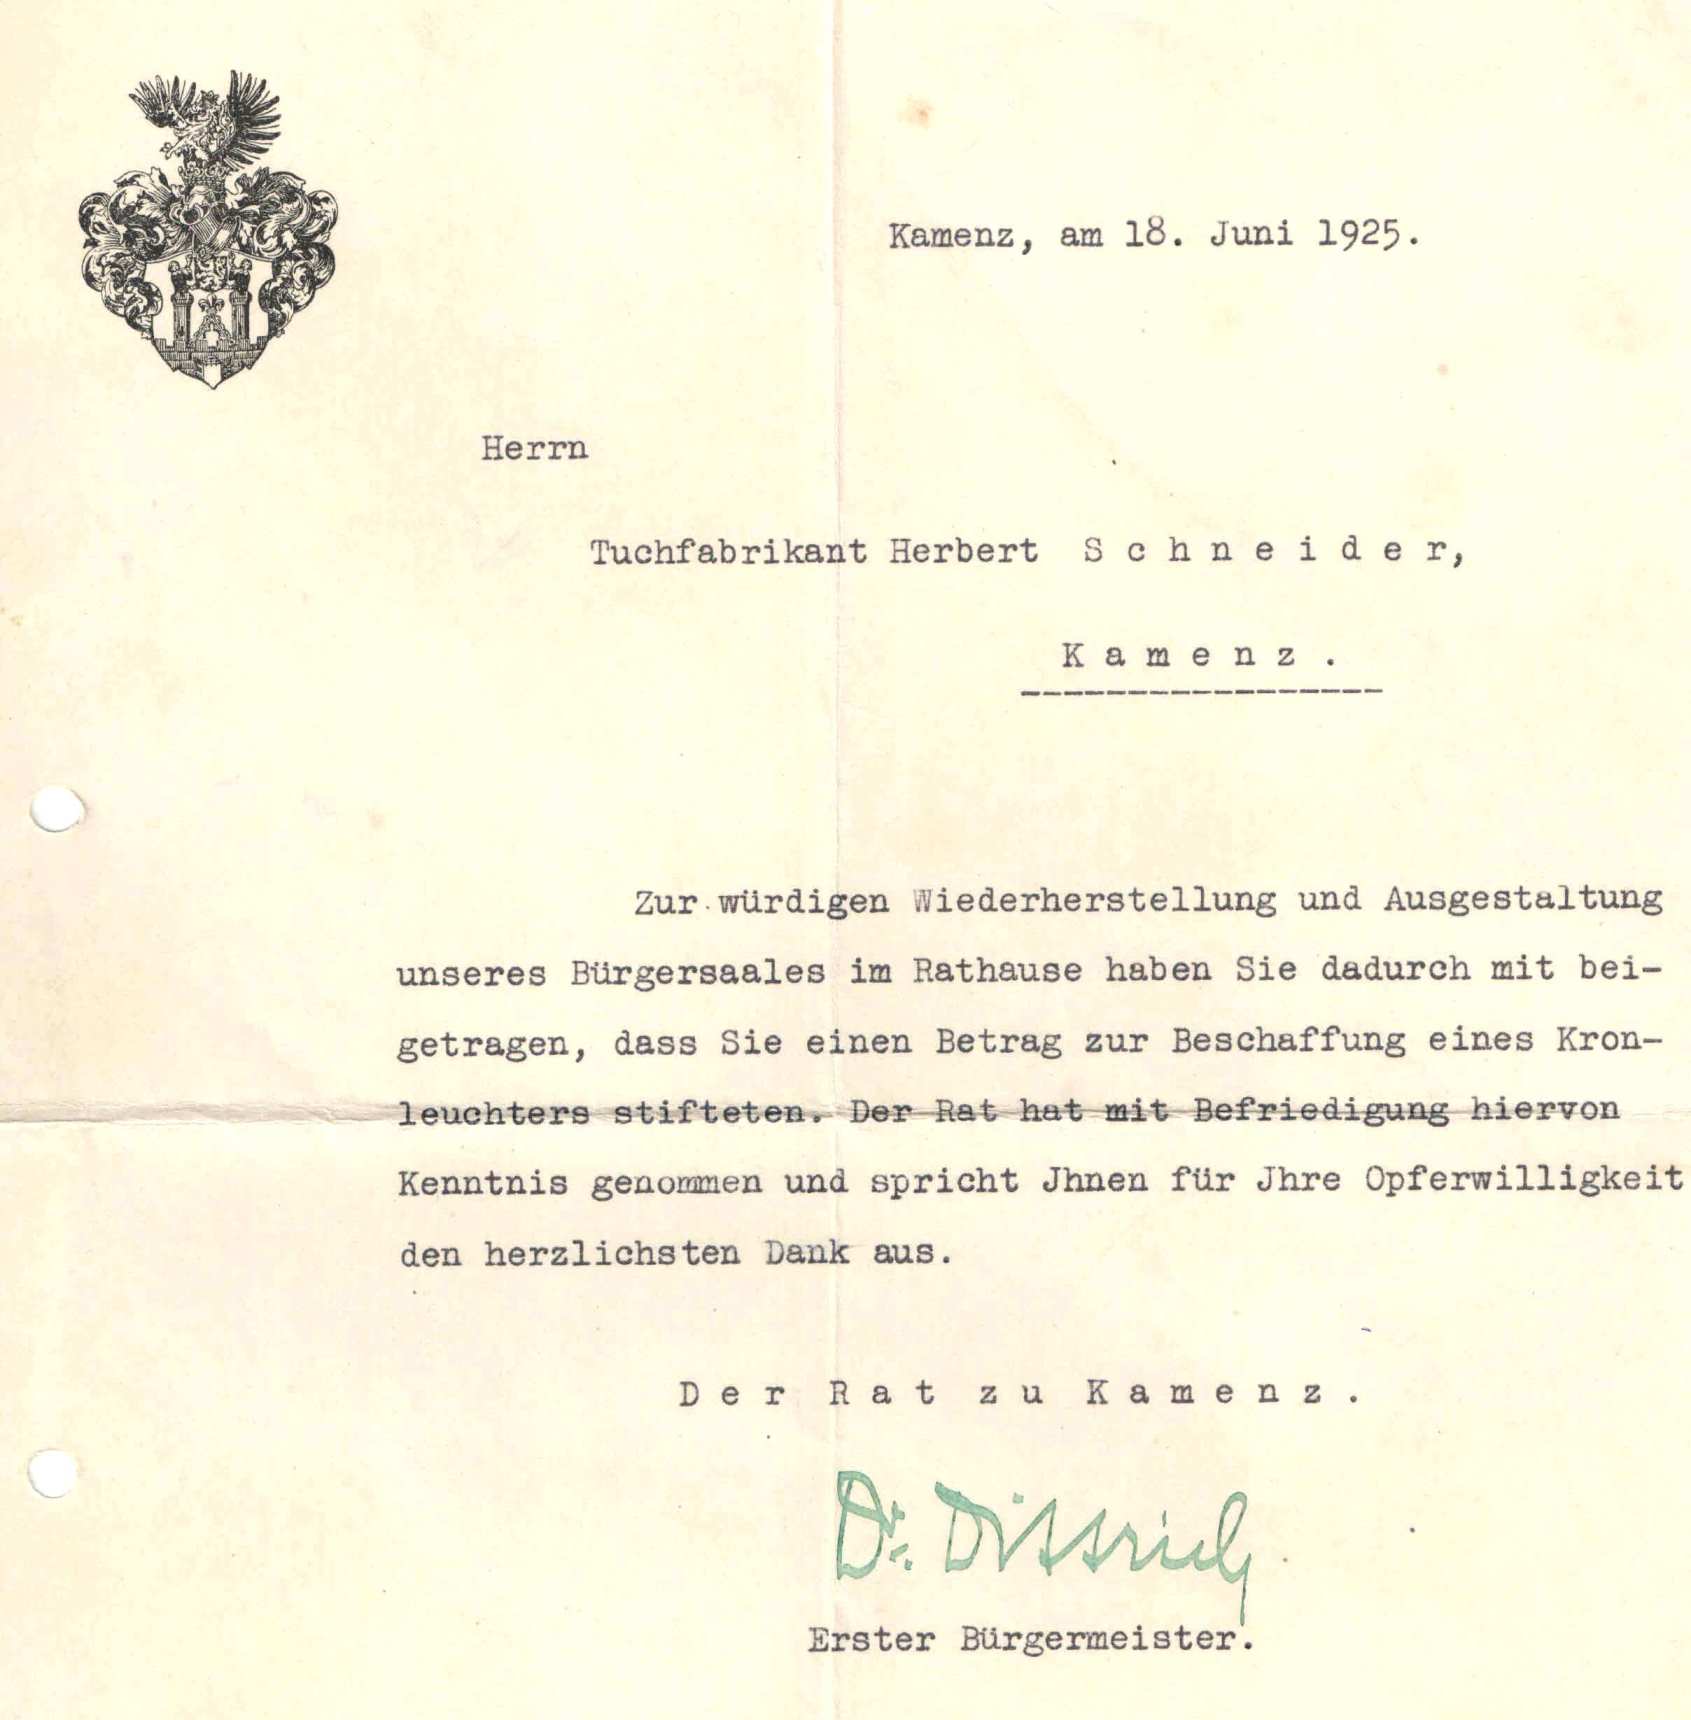 Schreiben des Kamenzer Bürgermeisters Dr. Dietrich an Herbert Schneider.